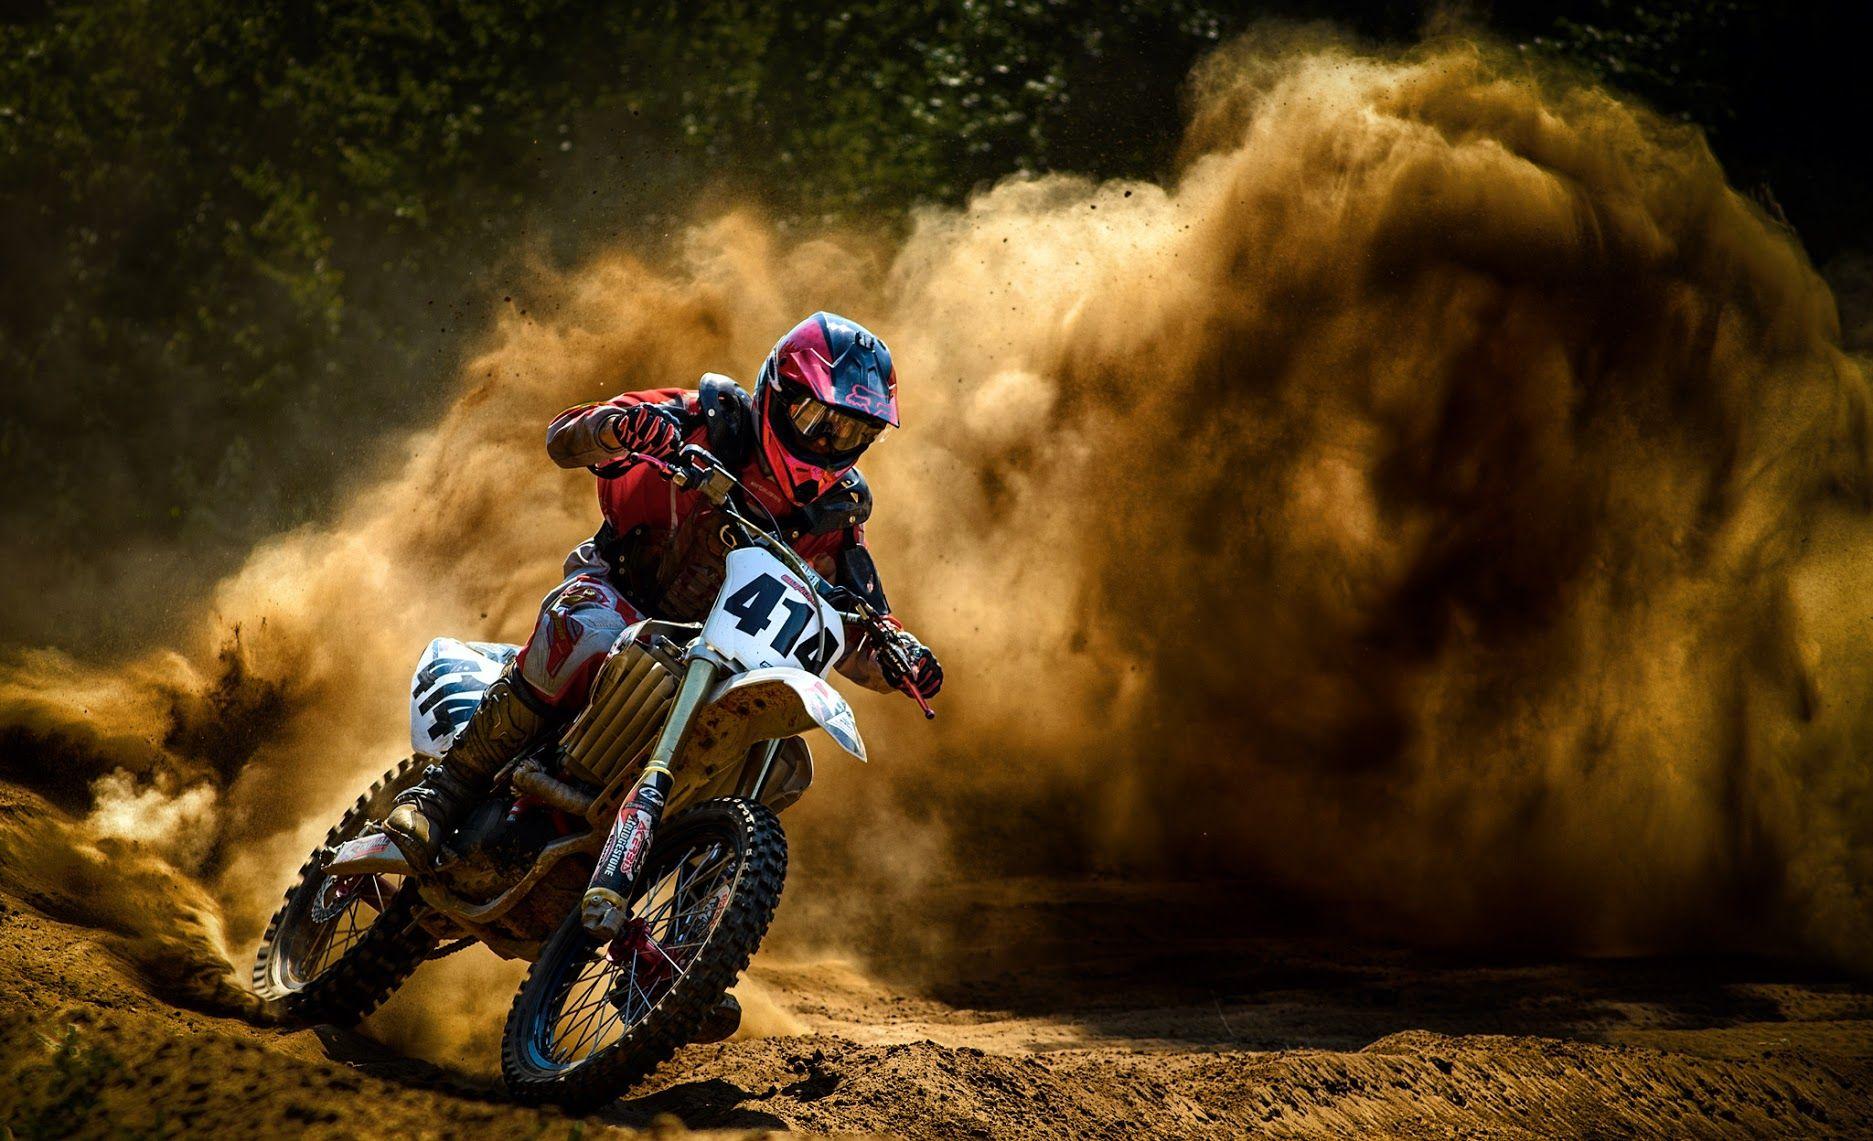 Sunset Bike Racing - Motocross instal the new version for mac